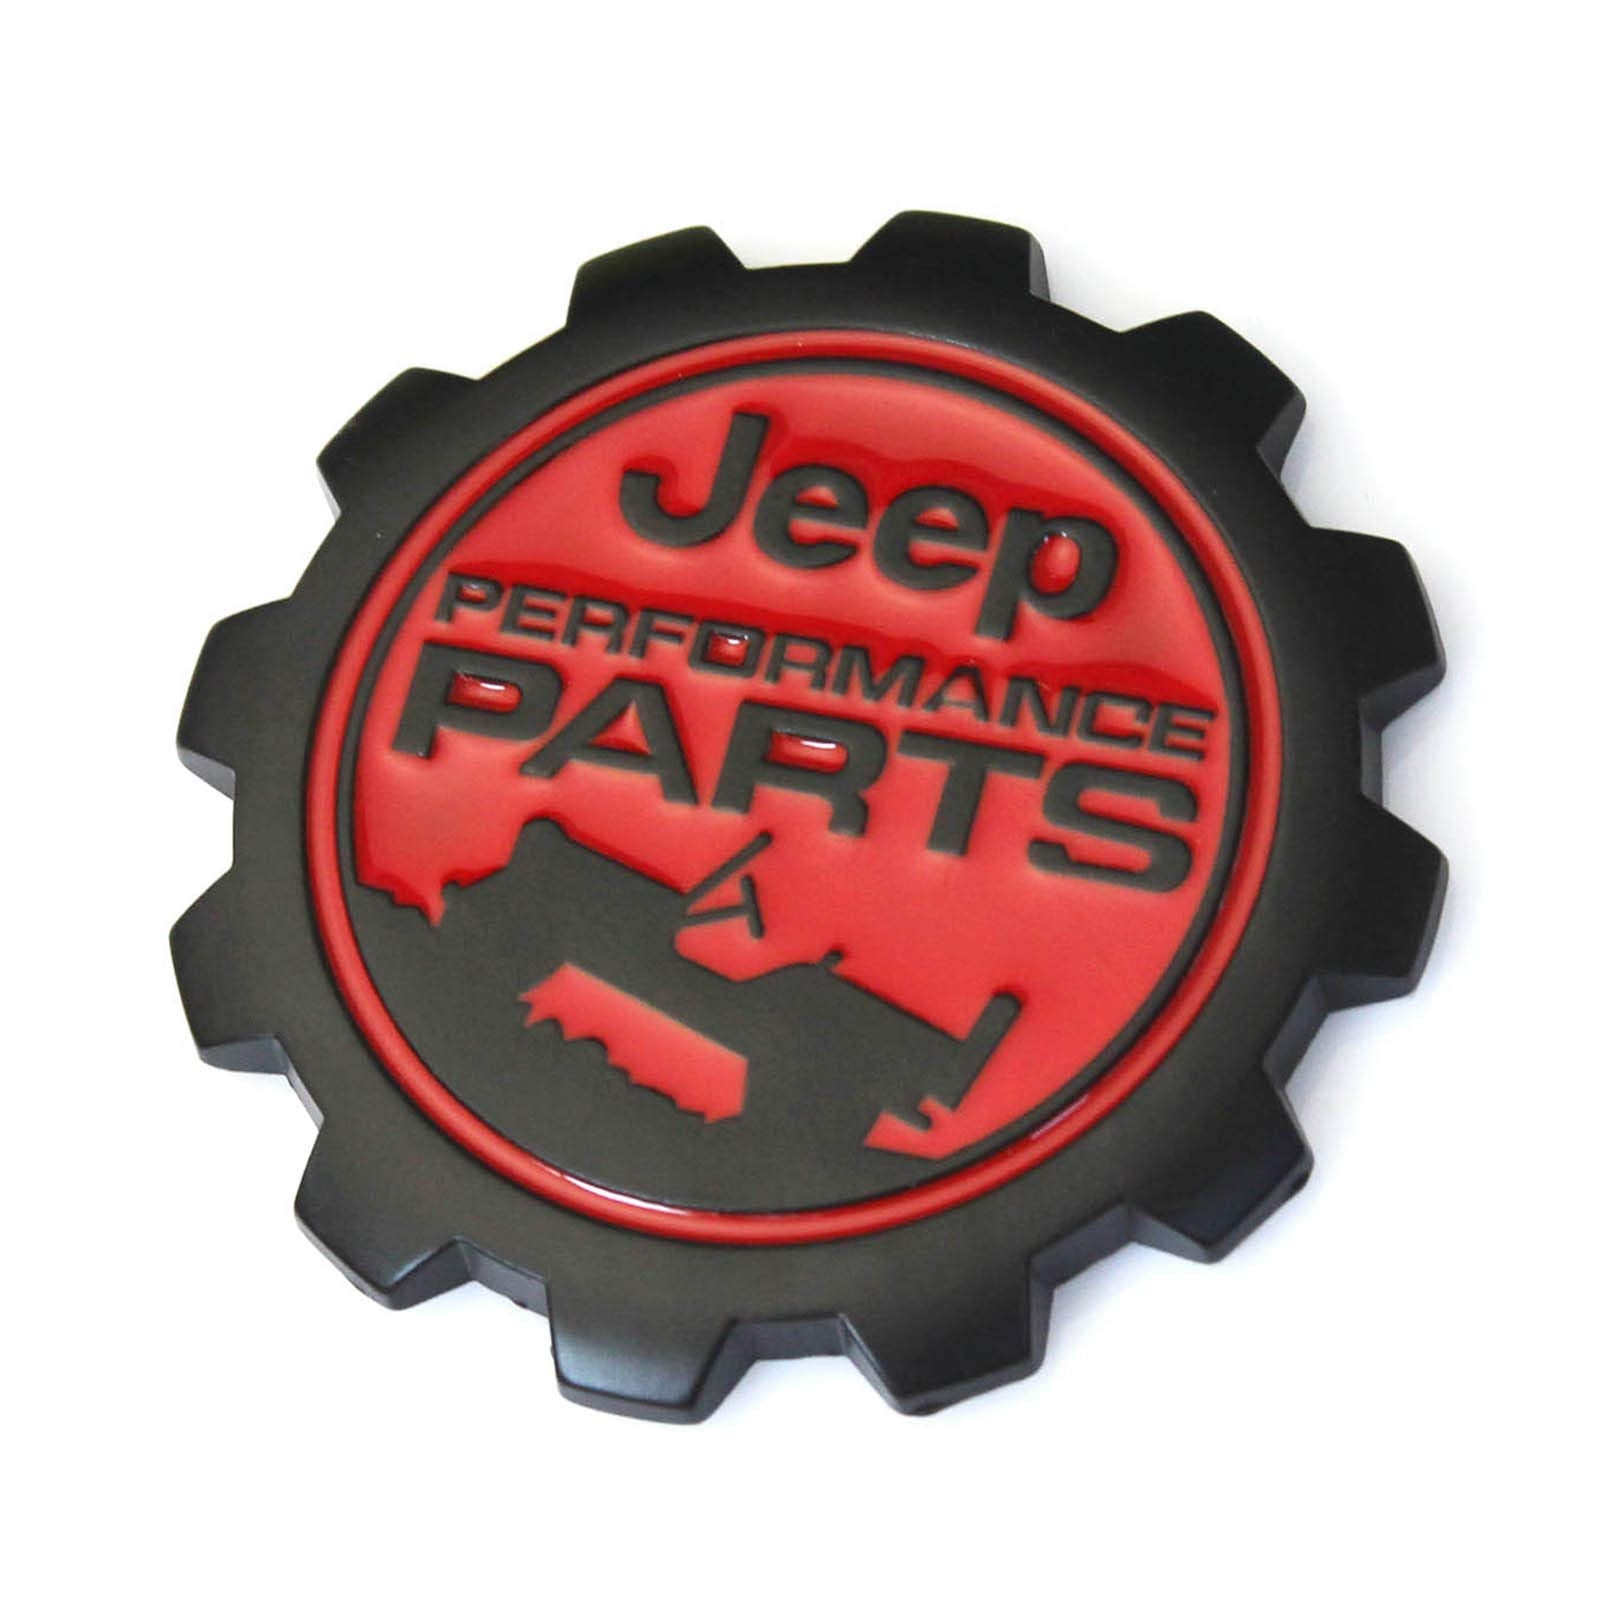 Jeep Performance Parts Badge Sticker